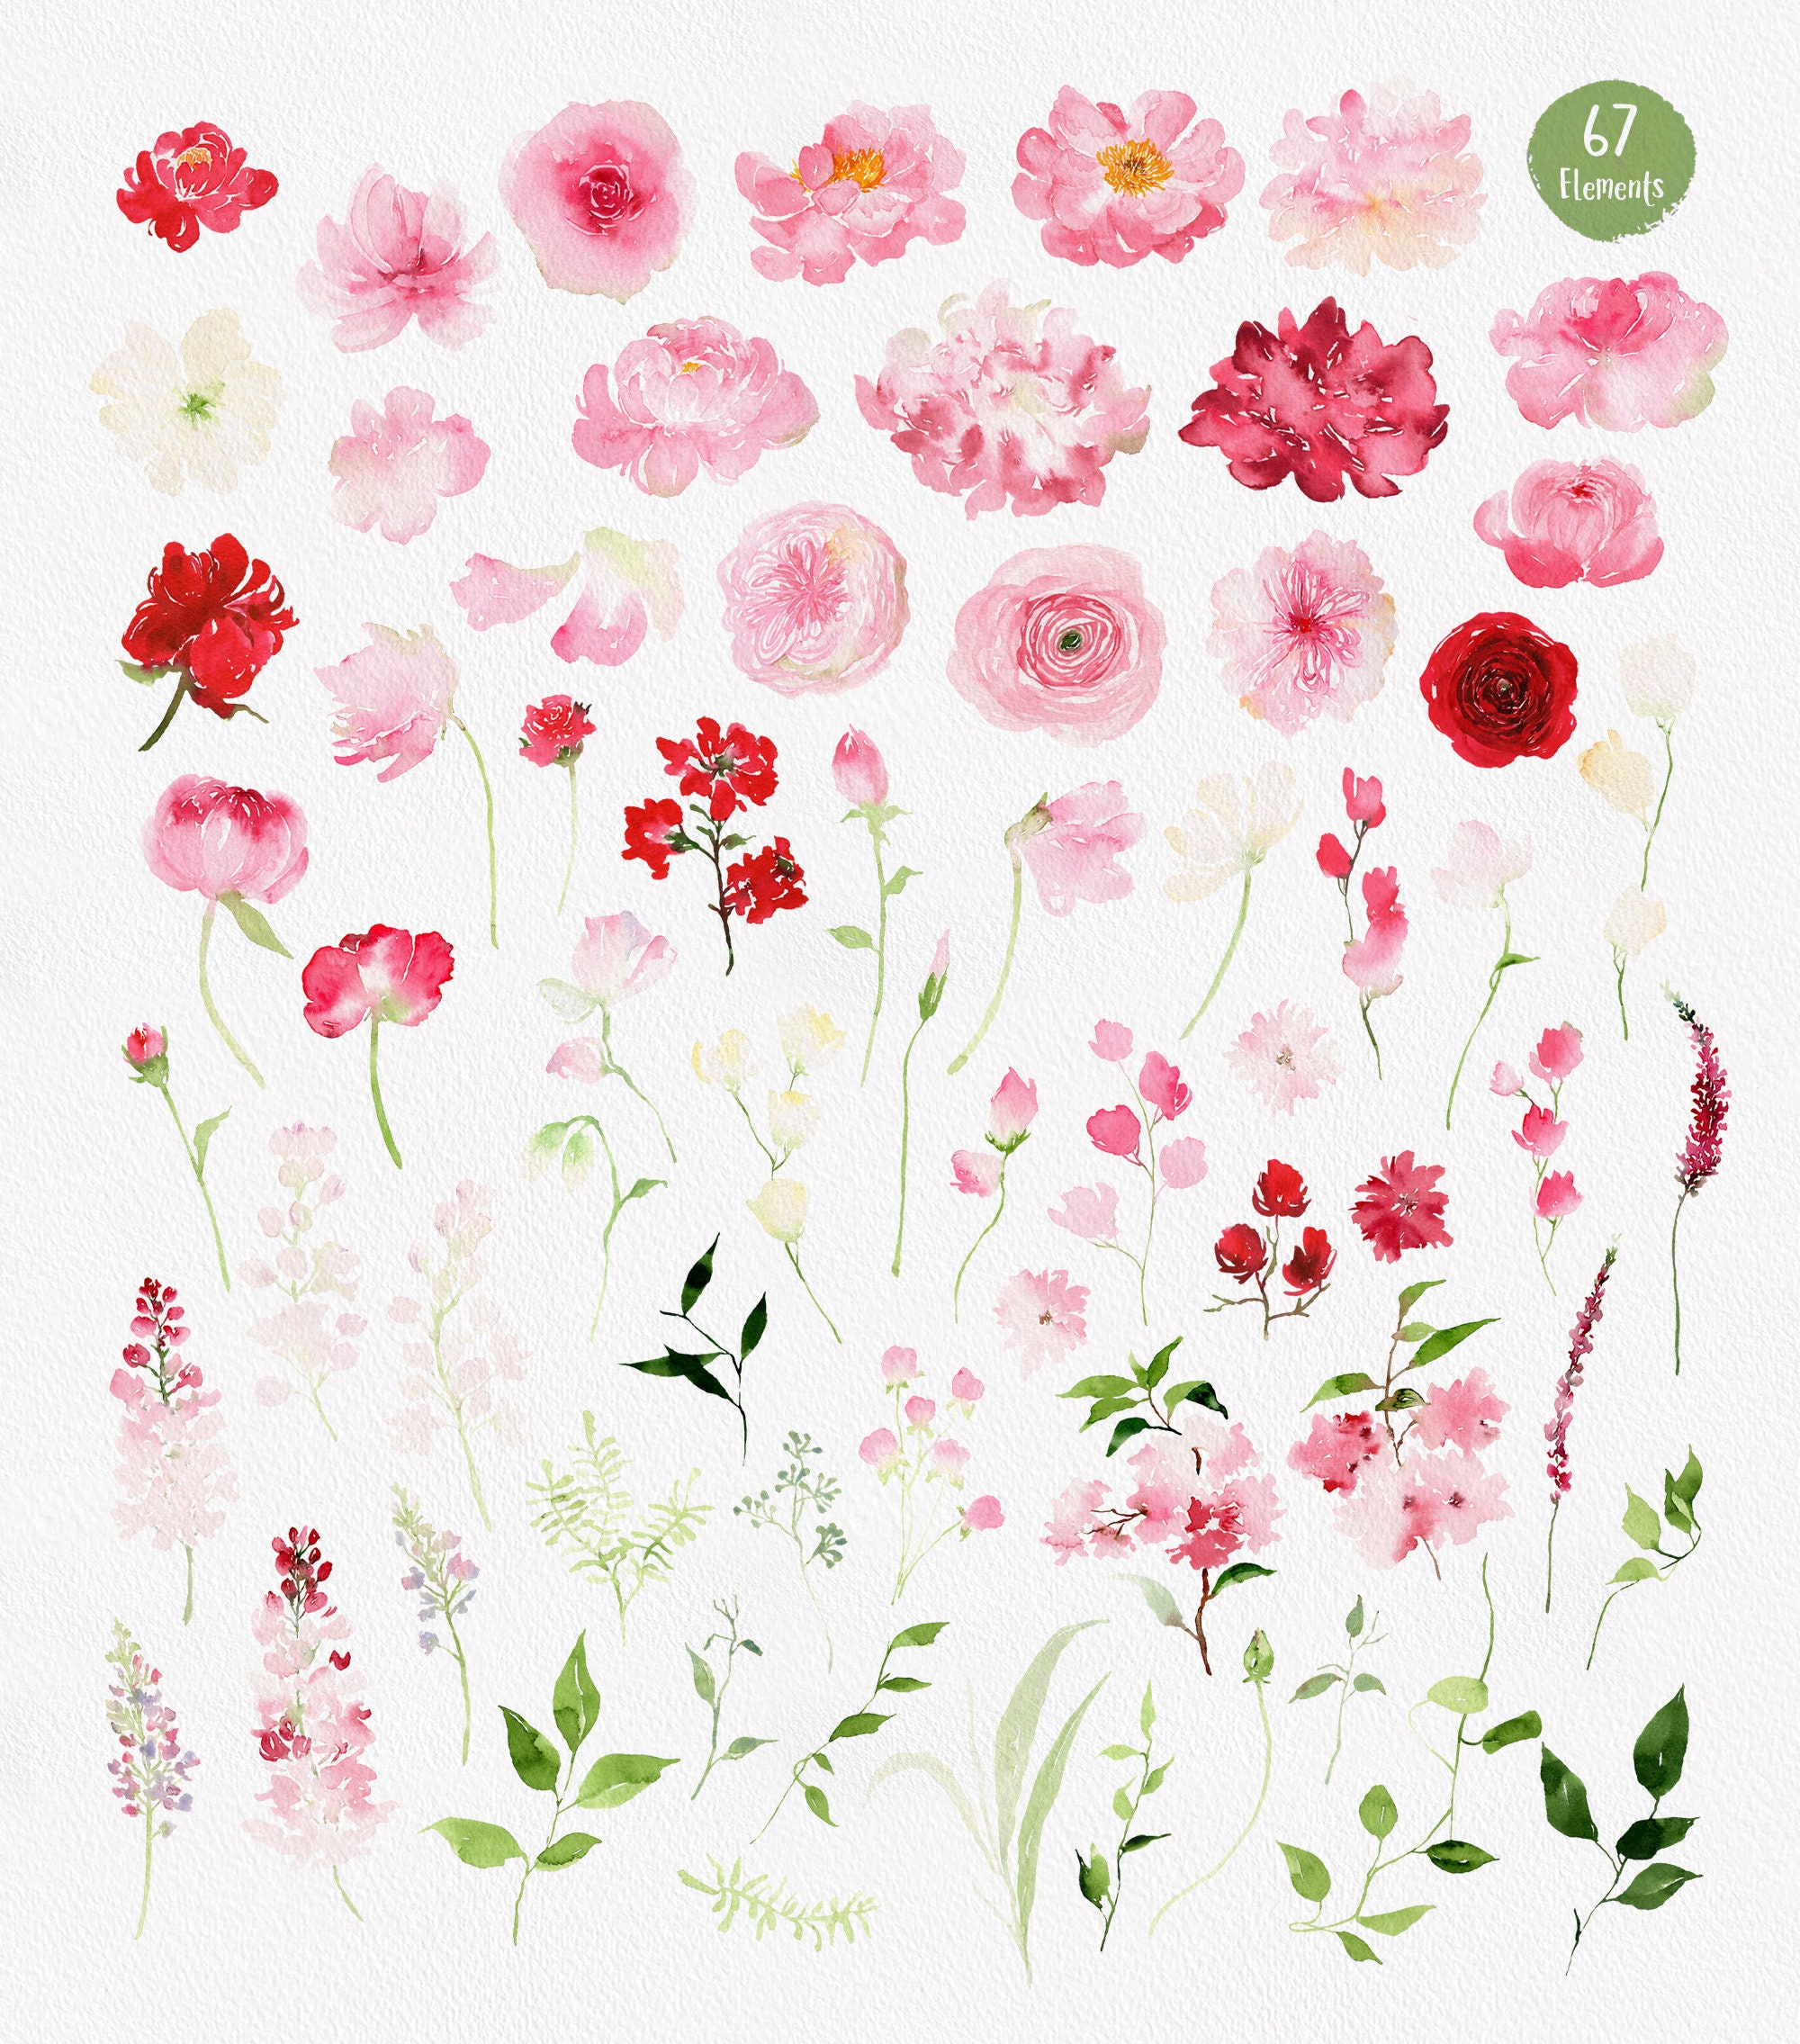 Watercolor Flower Arrangements Florals Graphic by sayedhasansaif04